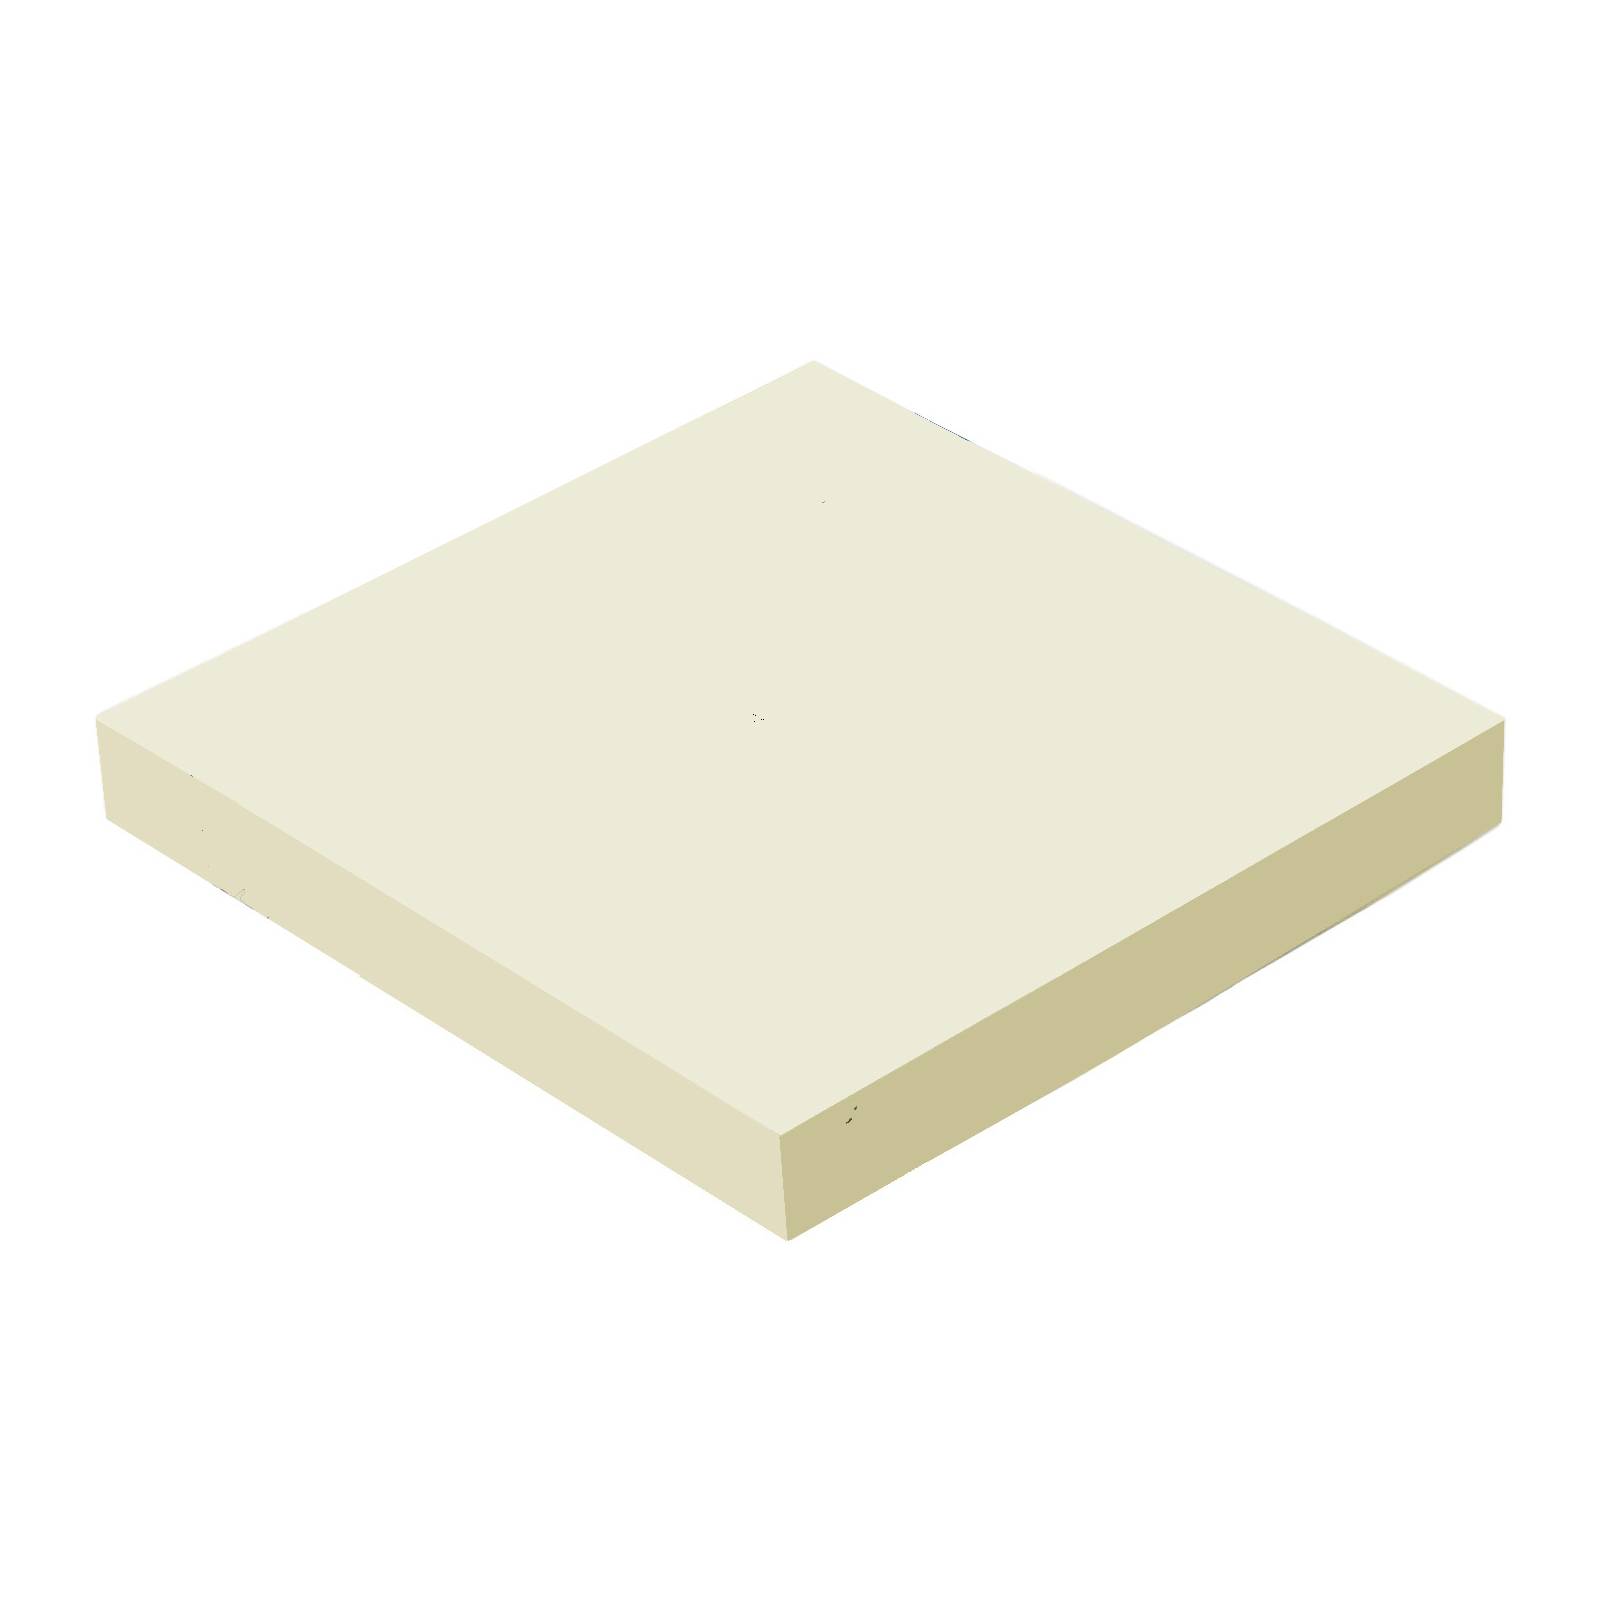 Папір для нотаток Buromax with adhesive layer 76х76мм, 100sheets, JOBMAX, yellow (BM.2312-01)